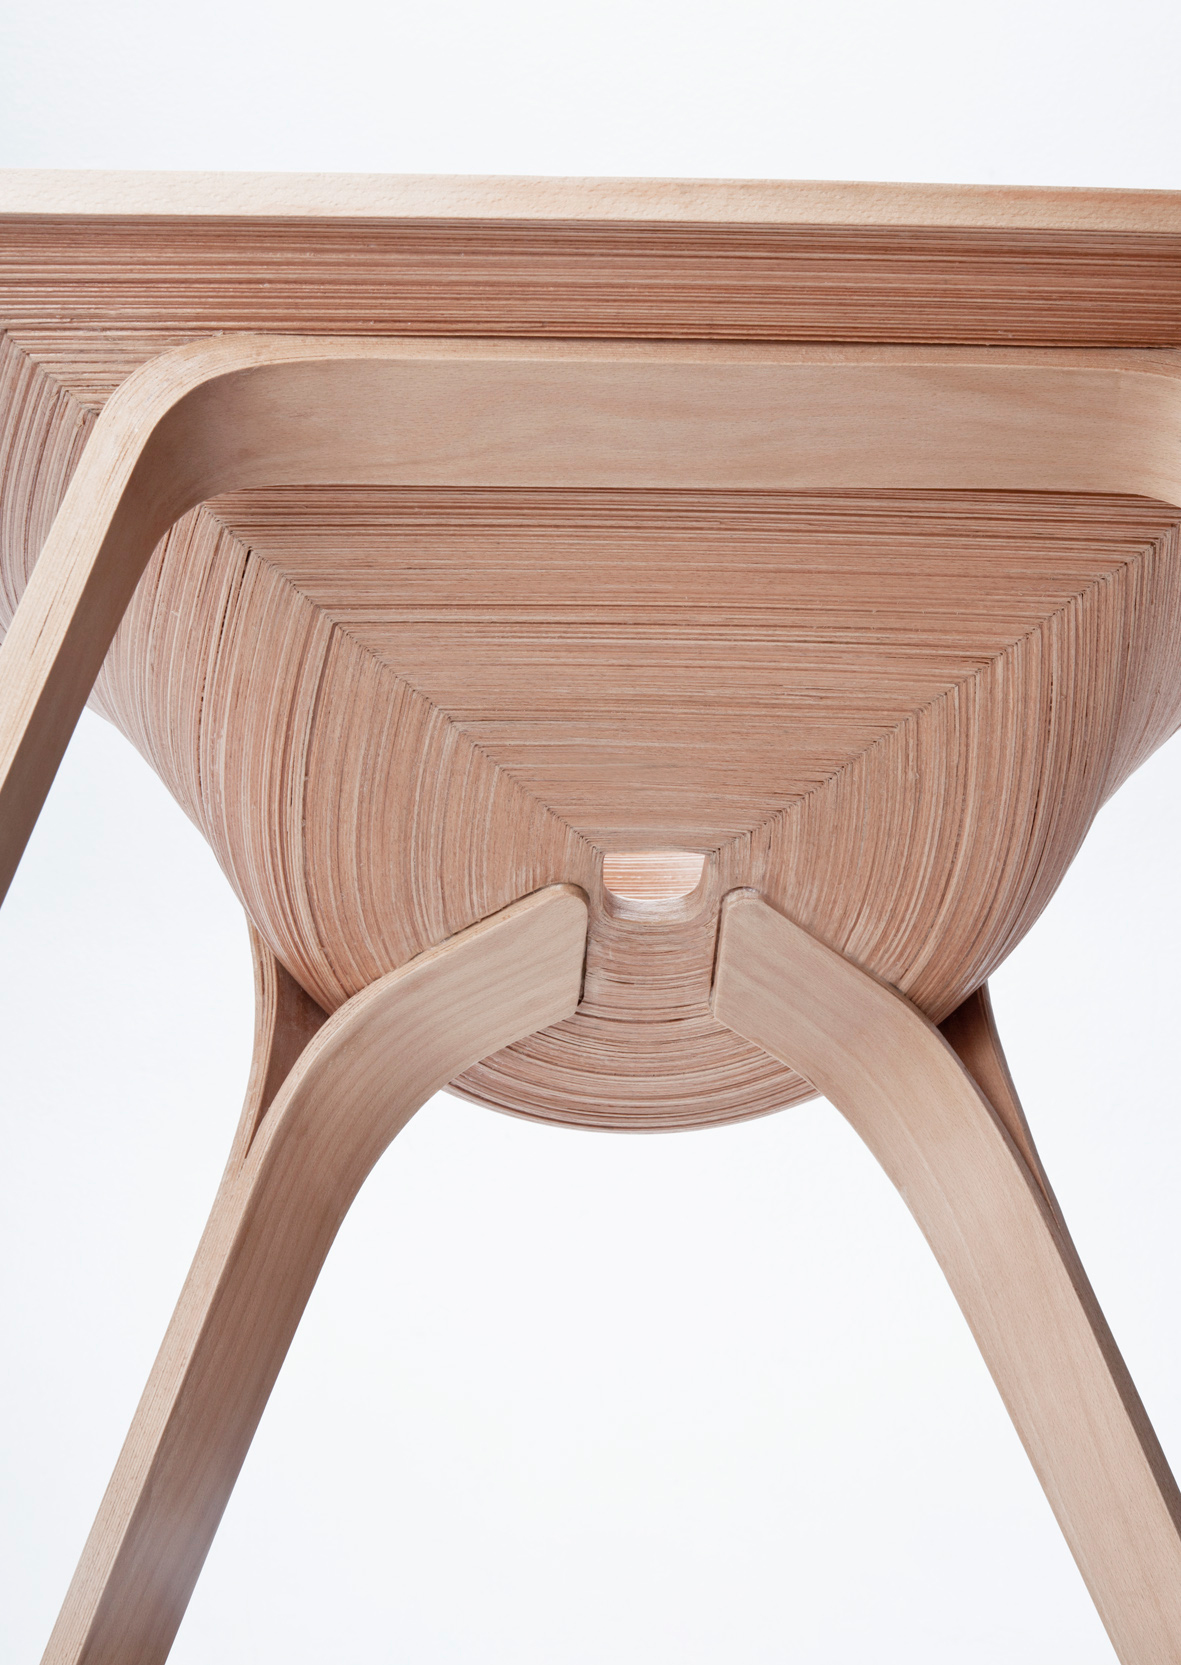 Bunaco chair  sustainable ecofriendly  crafts wooden chair veneer veneer chair tamashii craft and design japanese